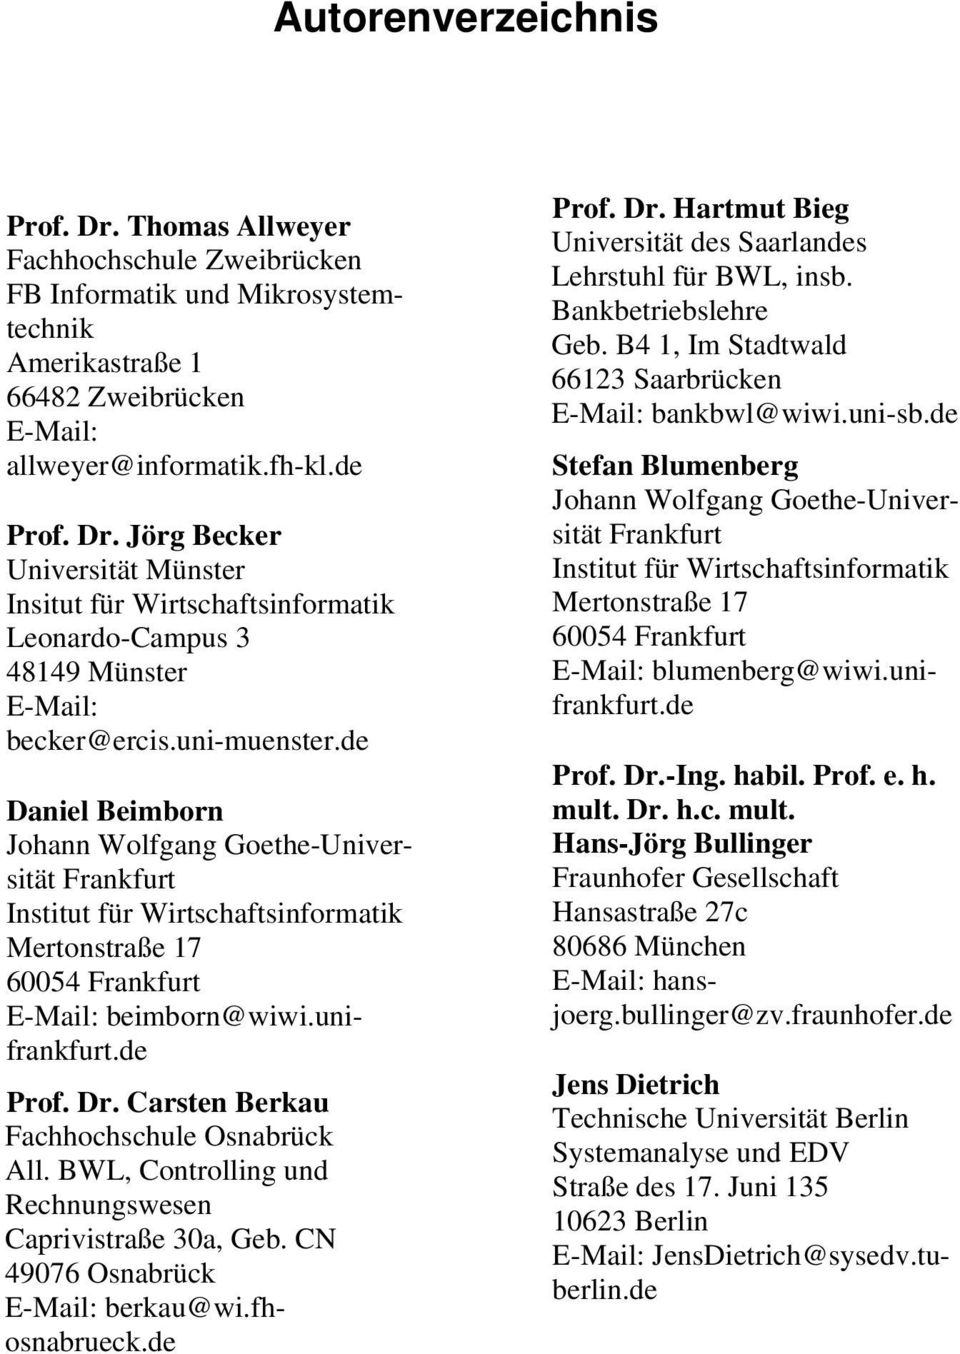 CN 49076 Osnabrück berkau@wi.fhosnabrueck.de Prof. Dr. Hartmut Bieg Lehrstuhl für BWL, insb. Bankbetriebslehre Geb. B4 1, Im Stadtwald bankbwl@wiwi.uni-sb.de Stefan Blumenberg 60054 blumenberg@wiwi.